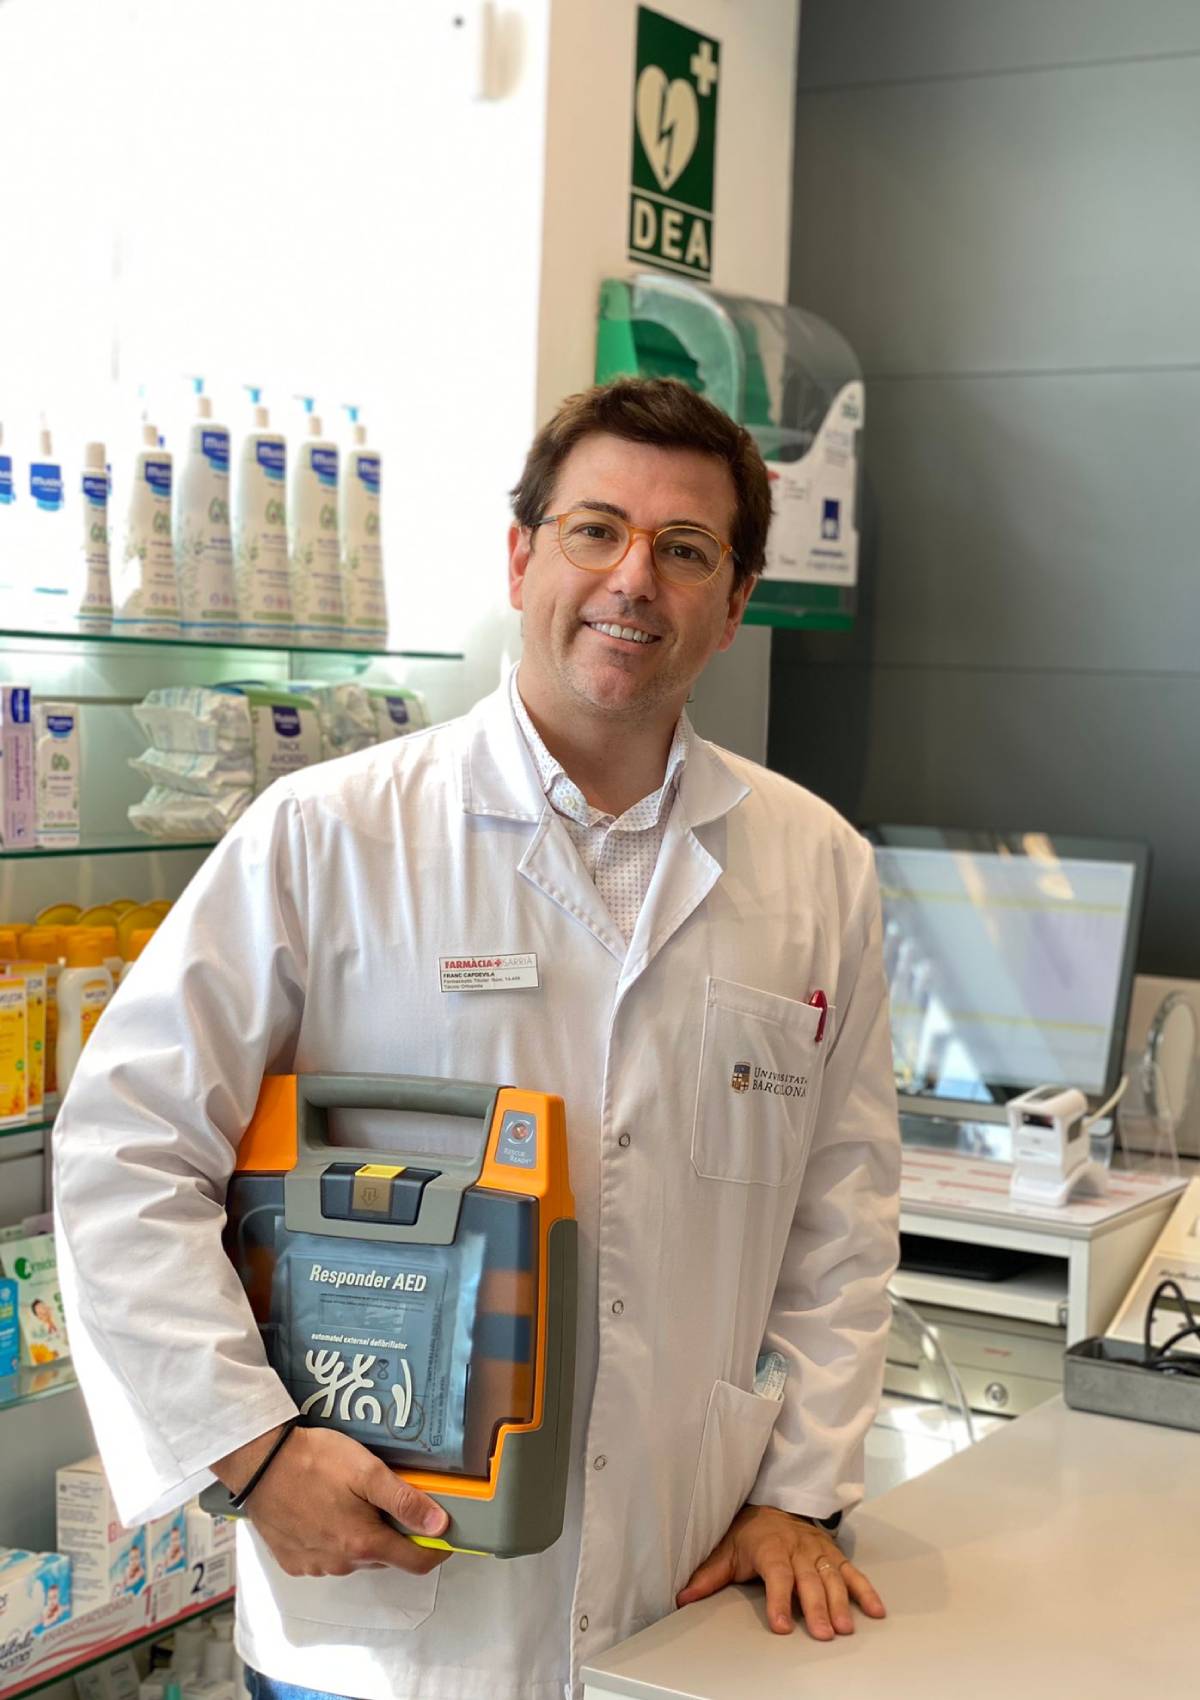 Franc Capdevila, titular de la Farmacia Sarrià de Barcelona, con el desfibrilador de su botica.